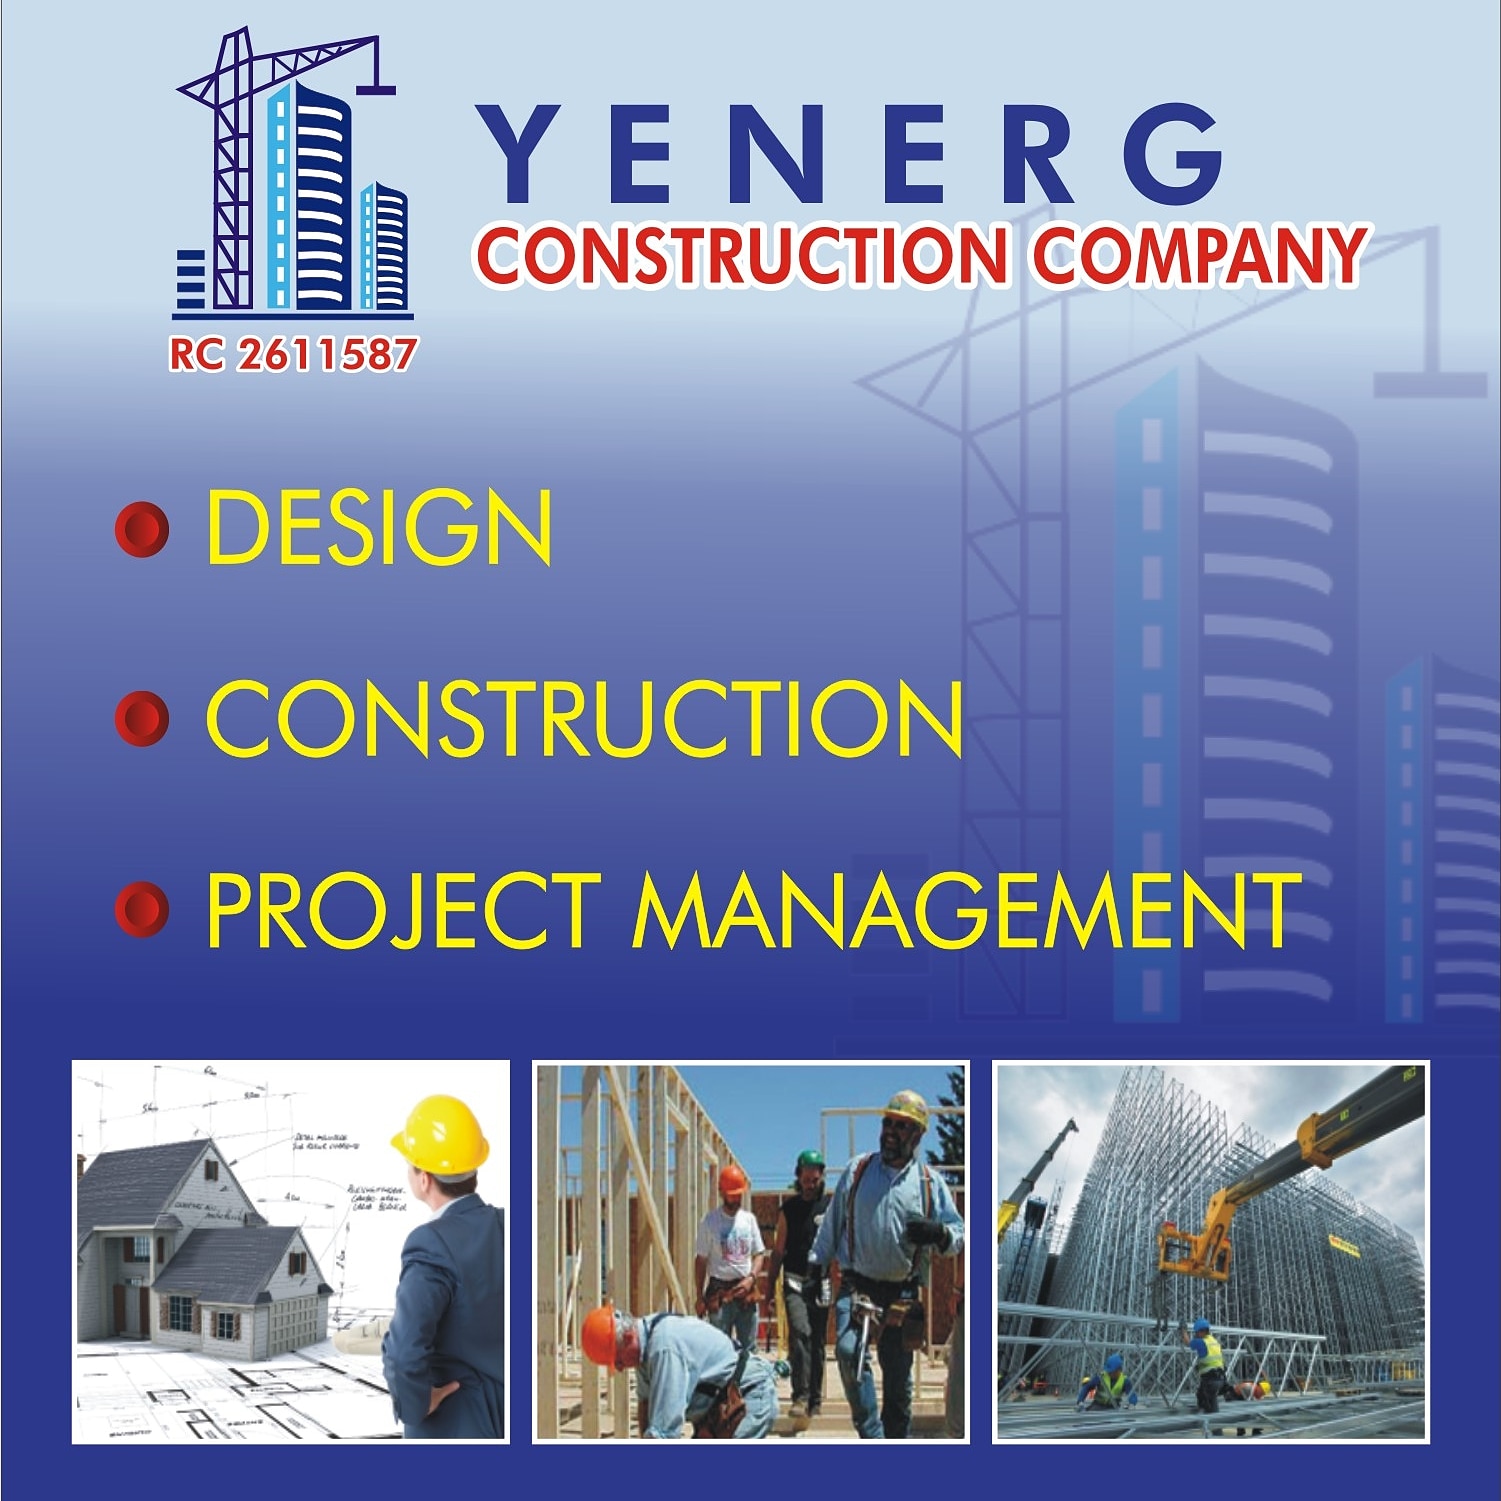 YENERG CONSTRUCTION COMPANY